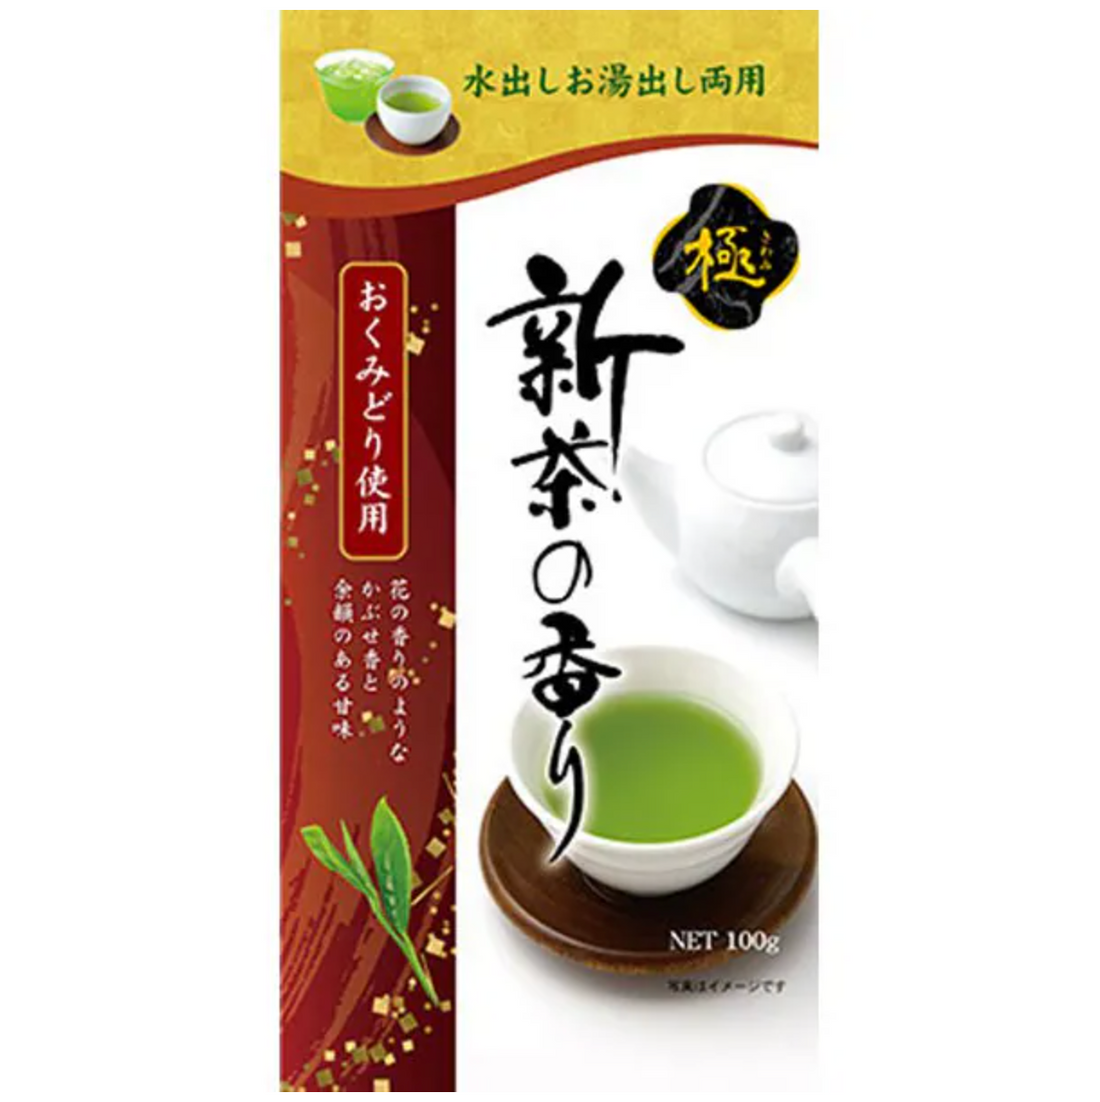 Ochanomaruko new tea scent Extreme 100g